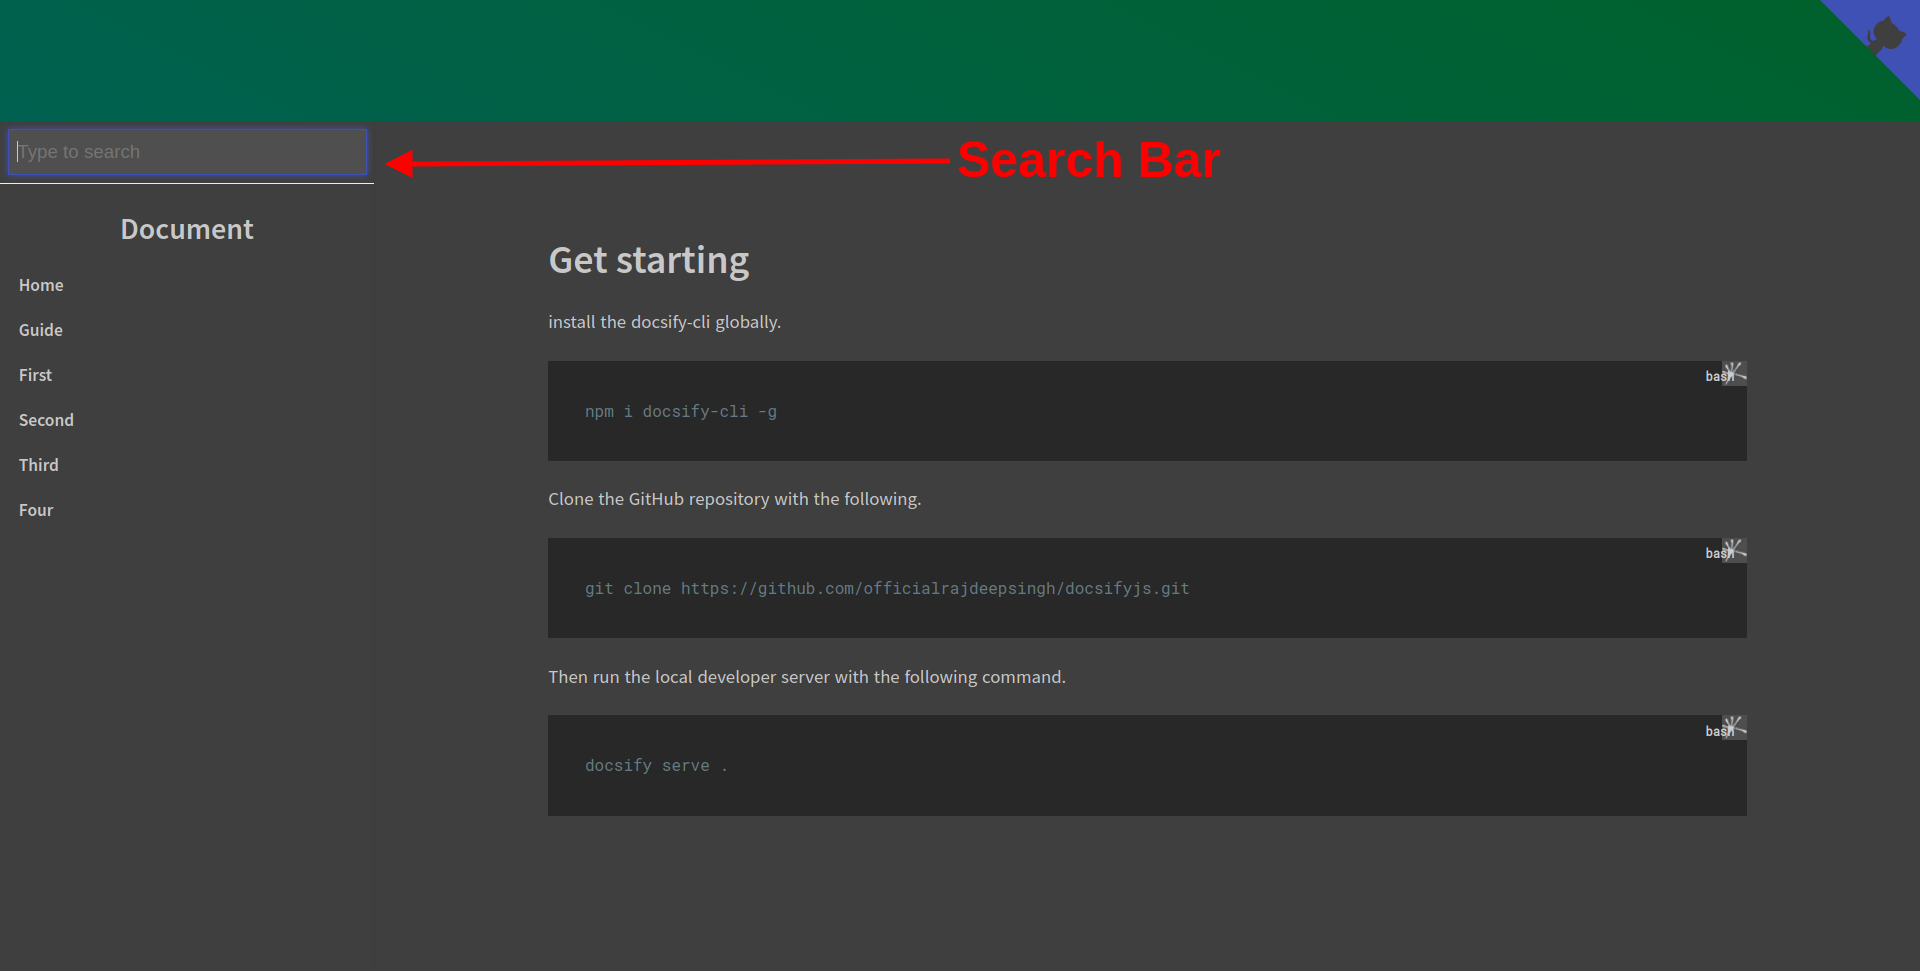 Search Bar